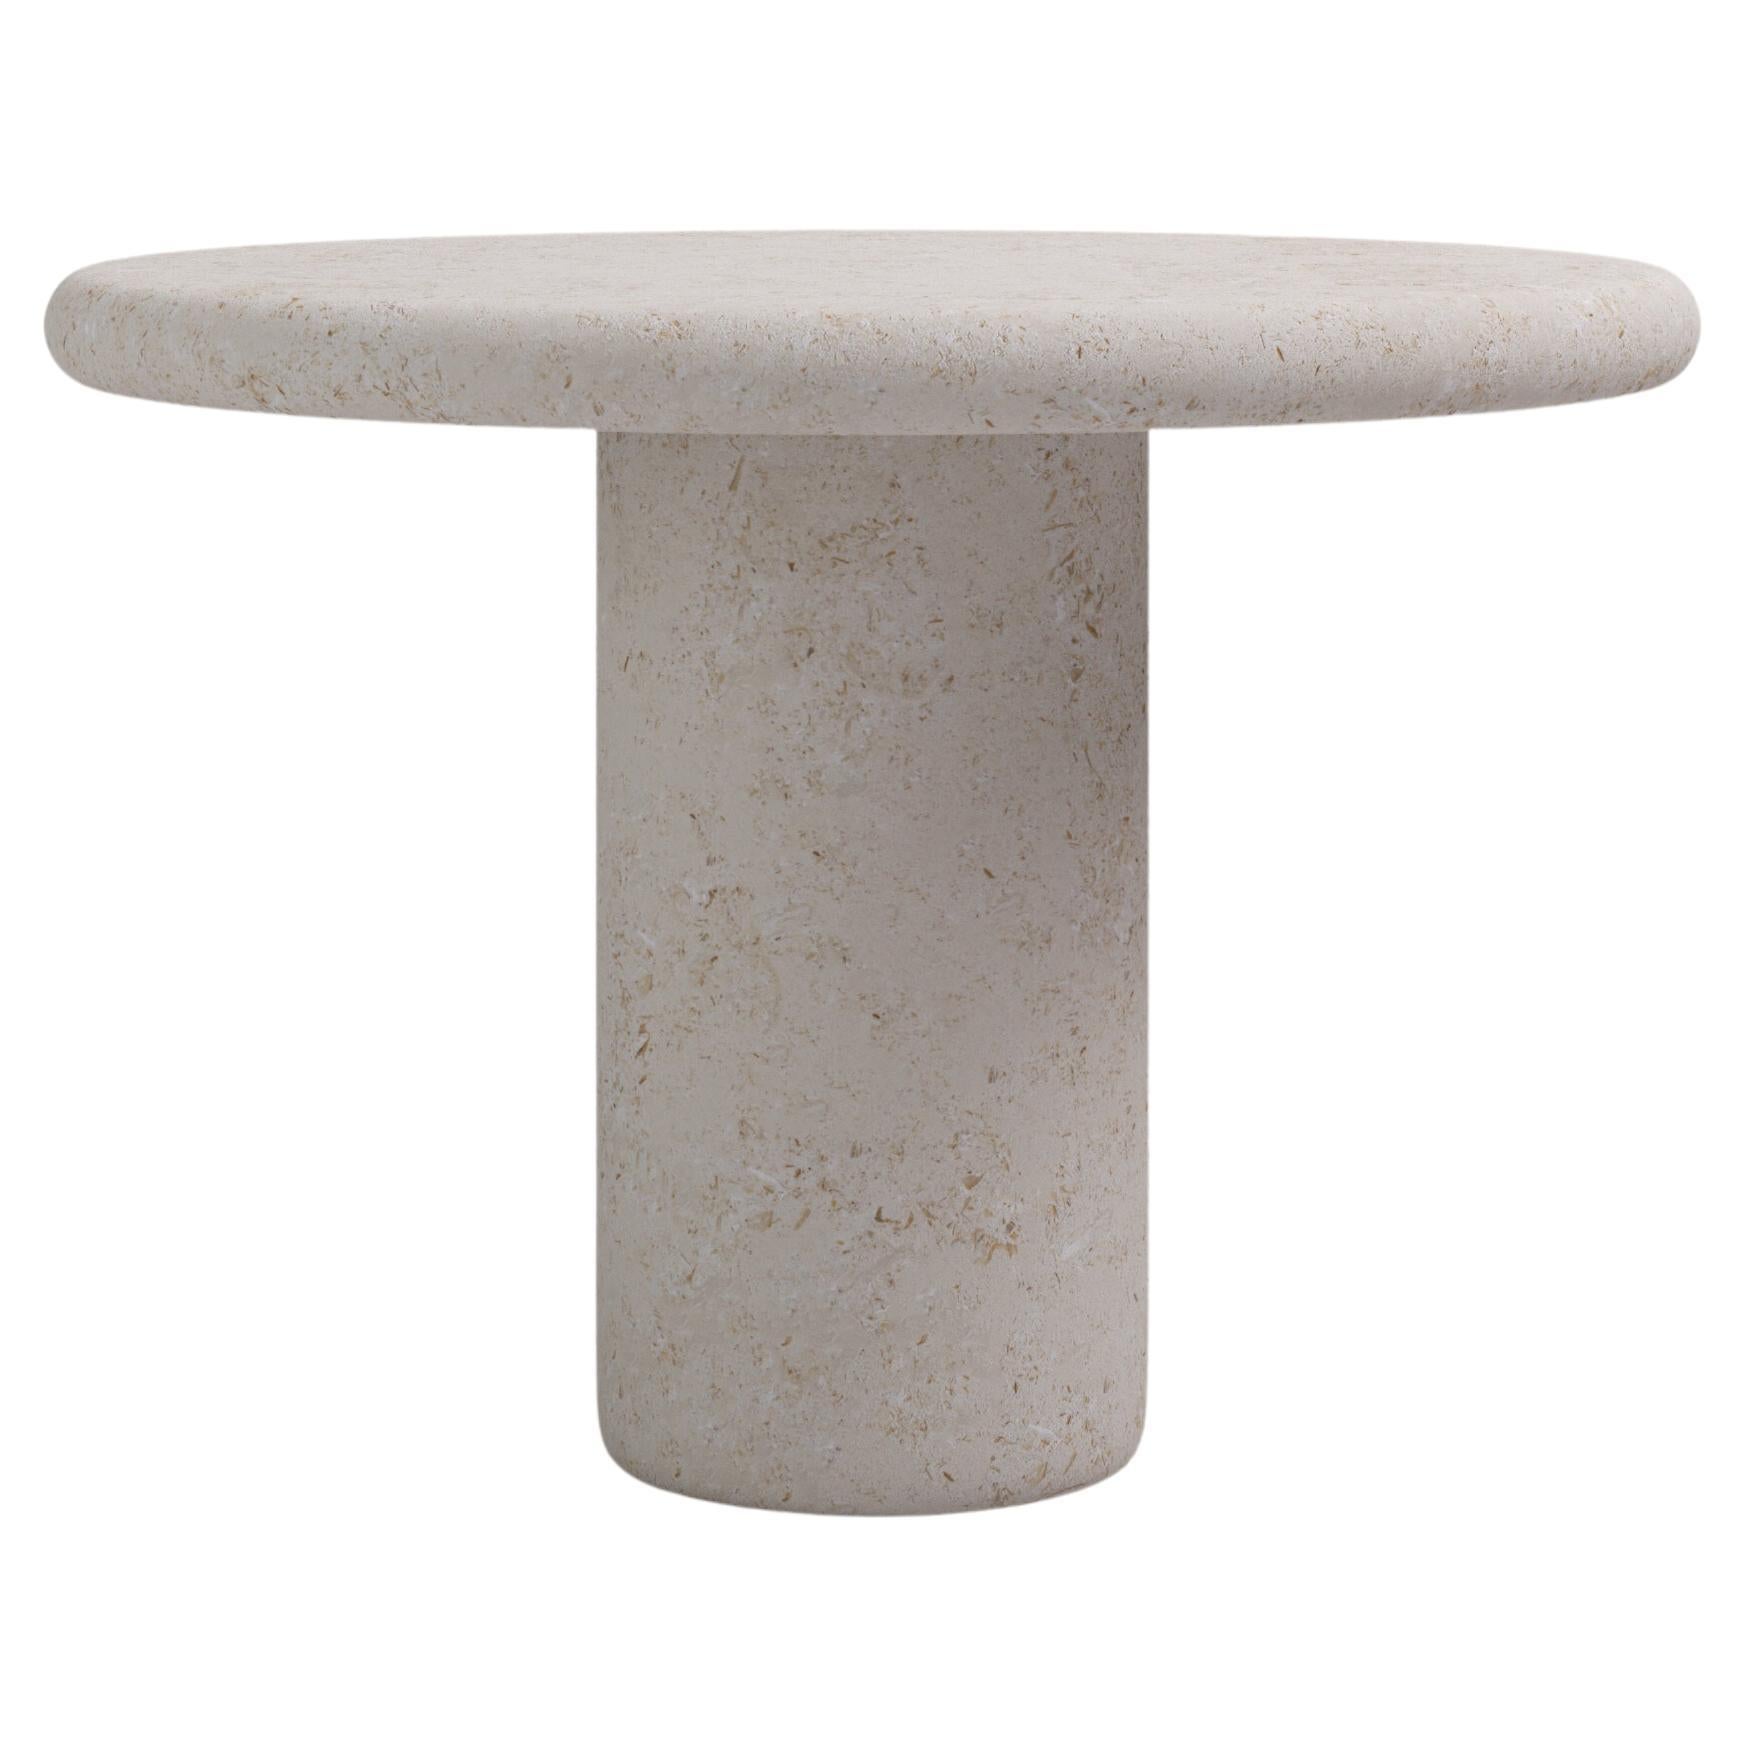 FORM(LA) Luna Round Dining Table 36”L x 36”W x 30”H Limestone Oceano For Sale